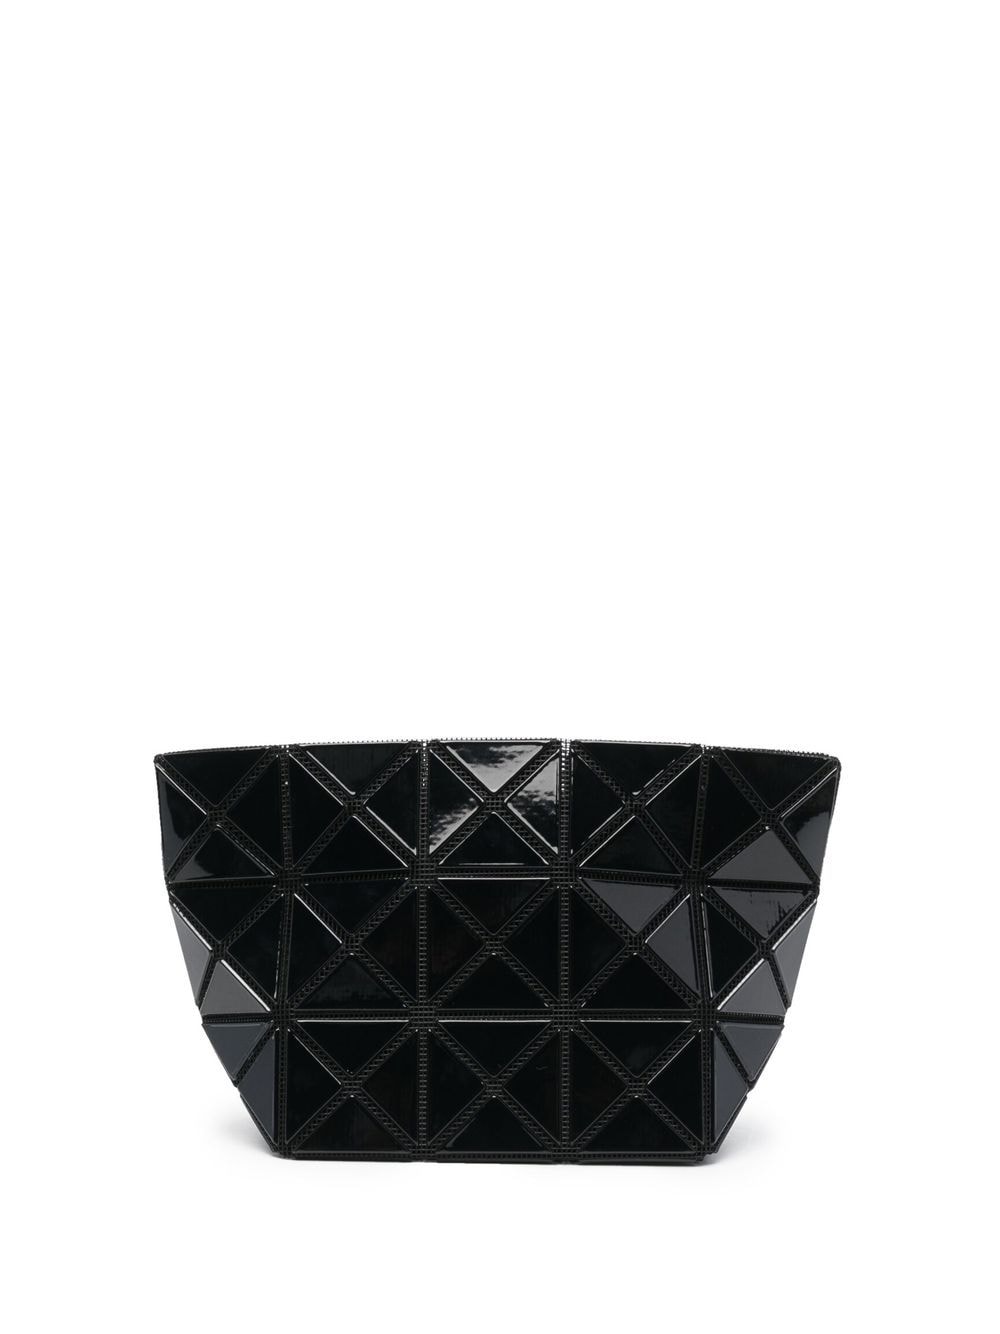 Bao Bao Issey Miyake Prism make up bag - Black von Bao Bao Issey Miyake